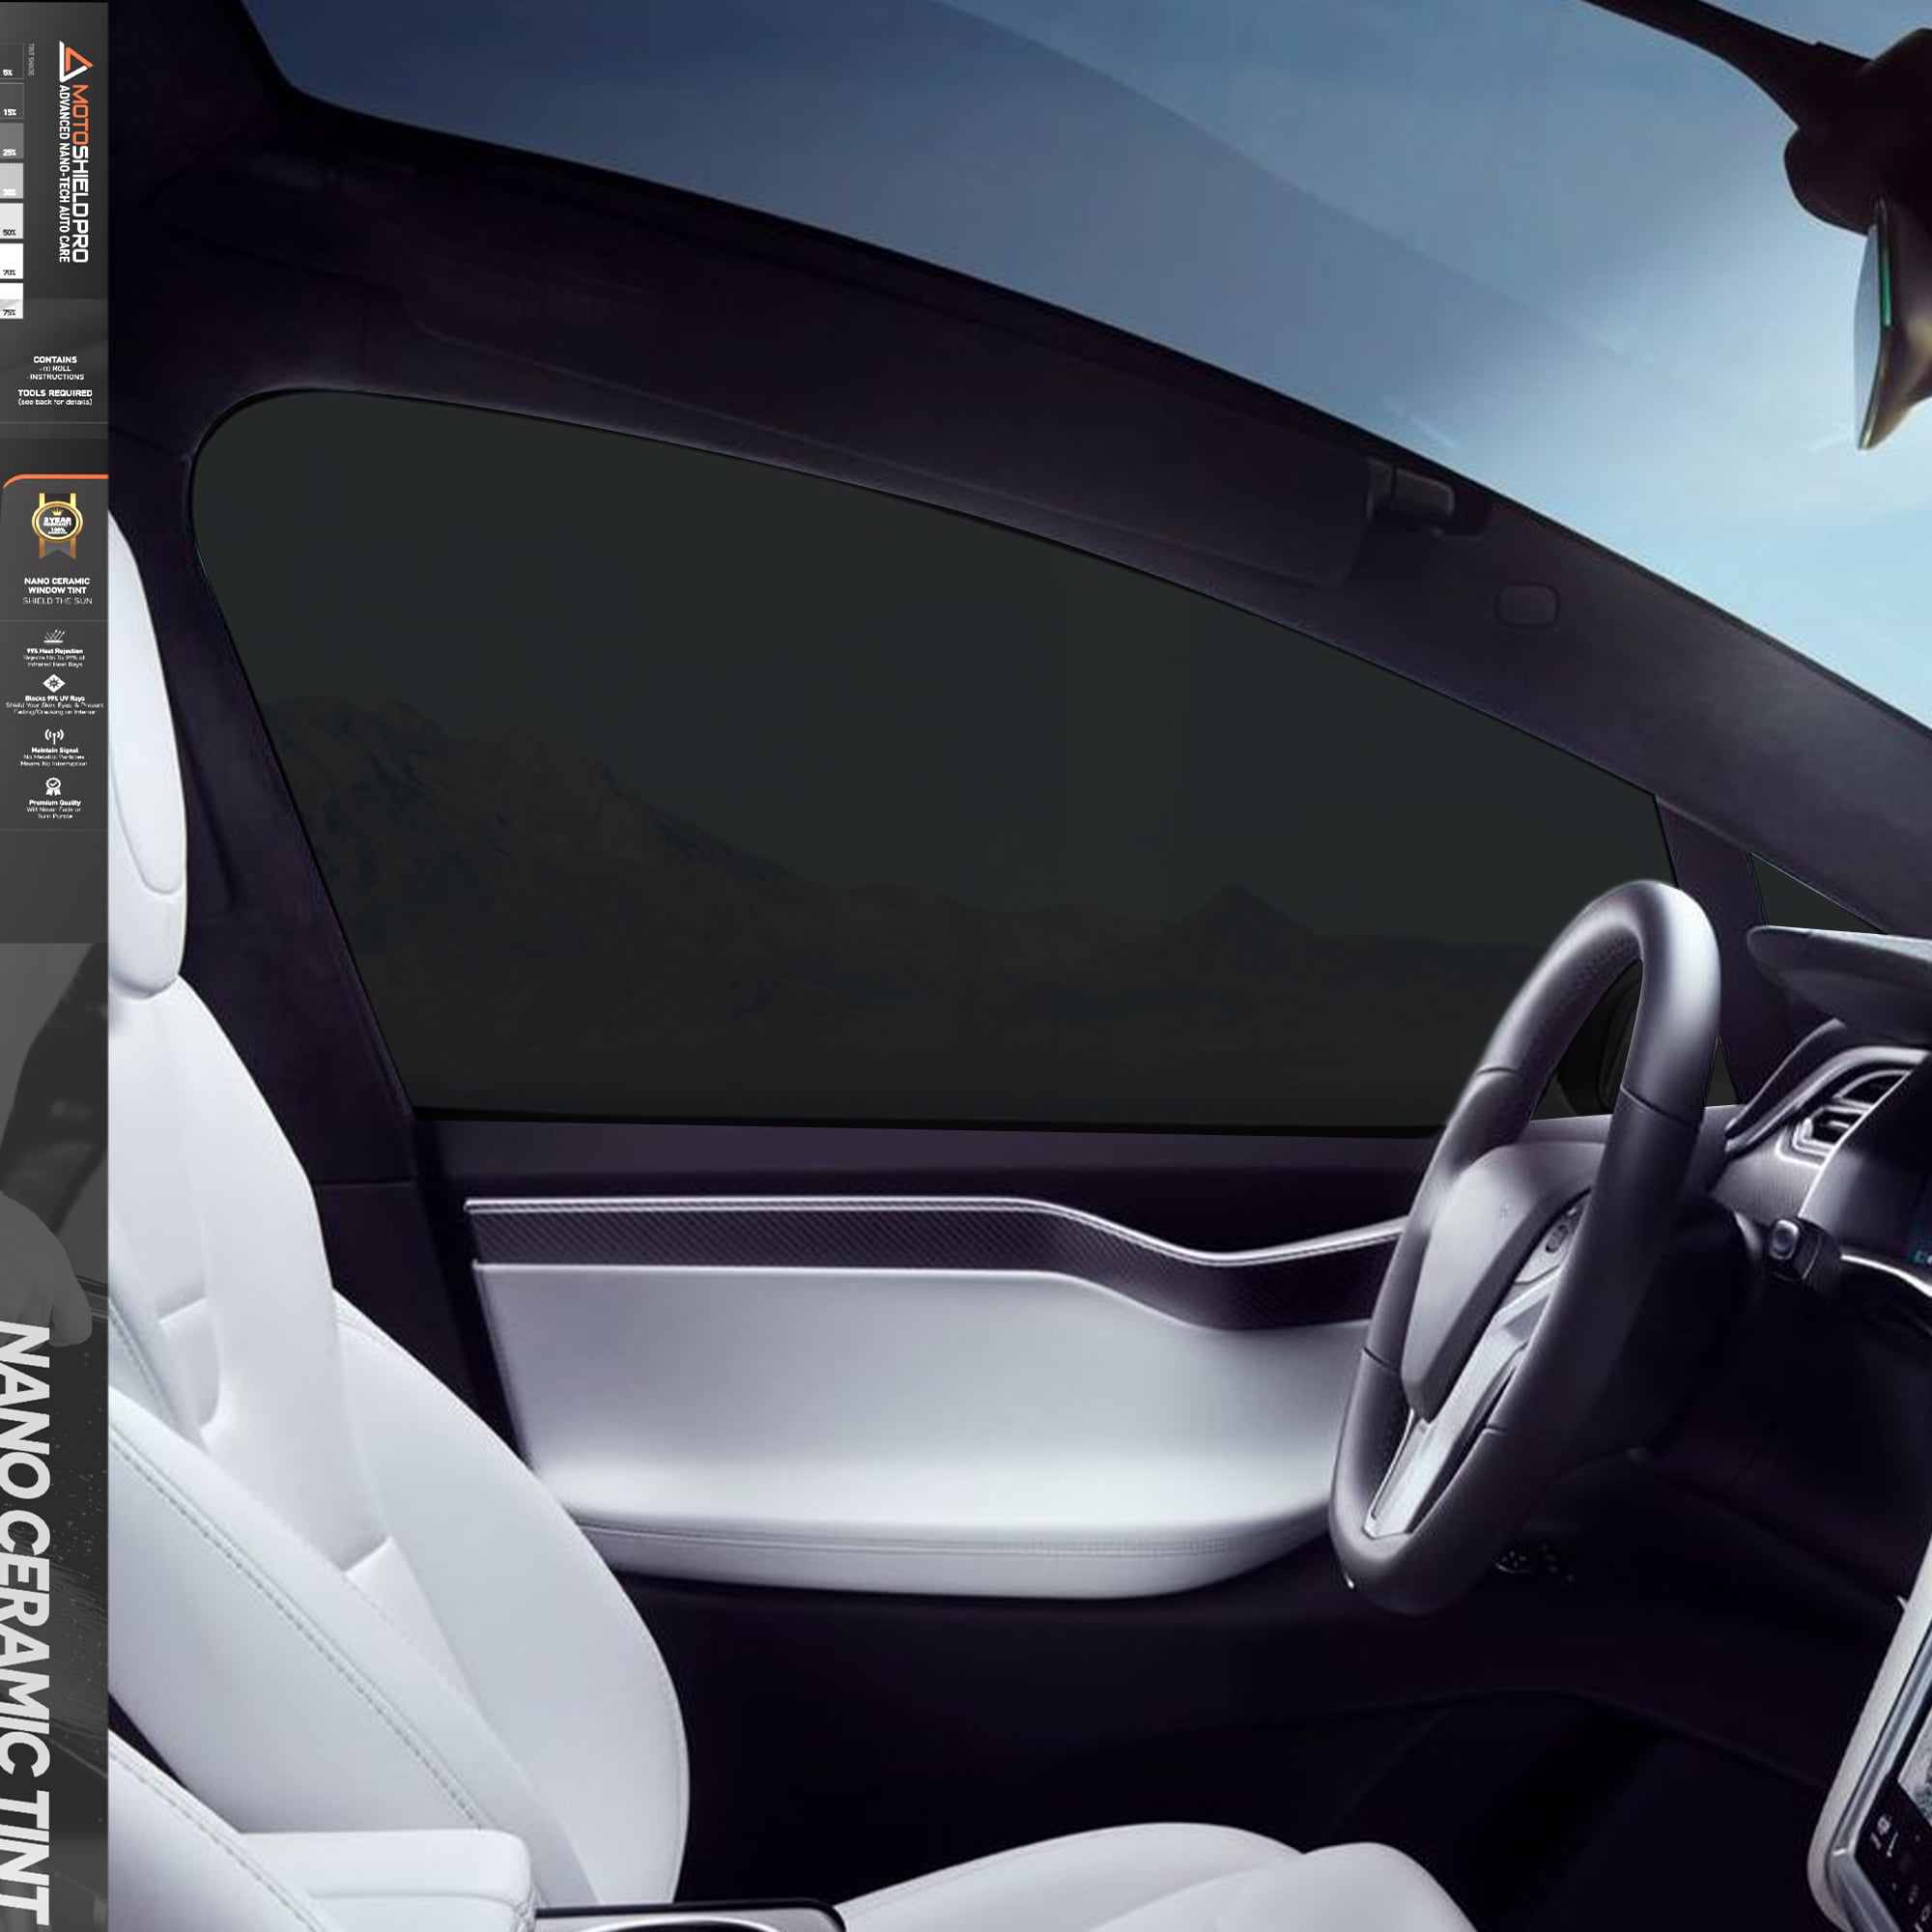 MotoShield Pro Professional Carbon Window Tint Film for Auto 5% VLT 20” in x 5’ ft Roll Reduces Heat & Blocks 99% UV Rays 